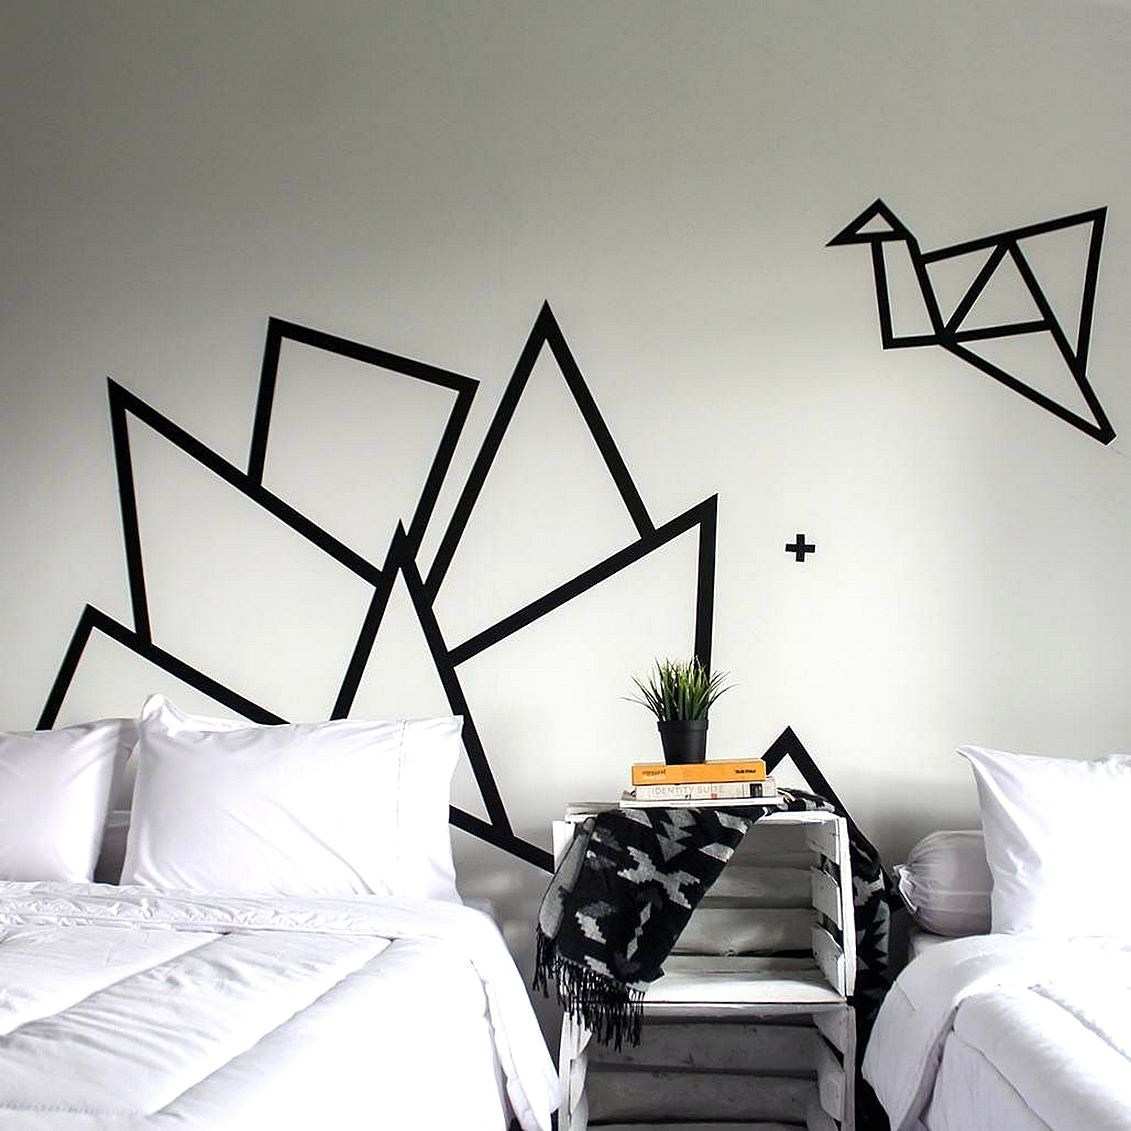 wallpaper dinding kamar hitam putih,wall,black and white,room,furniture,monochrome photography